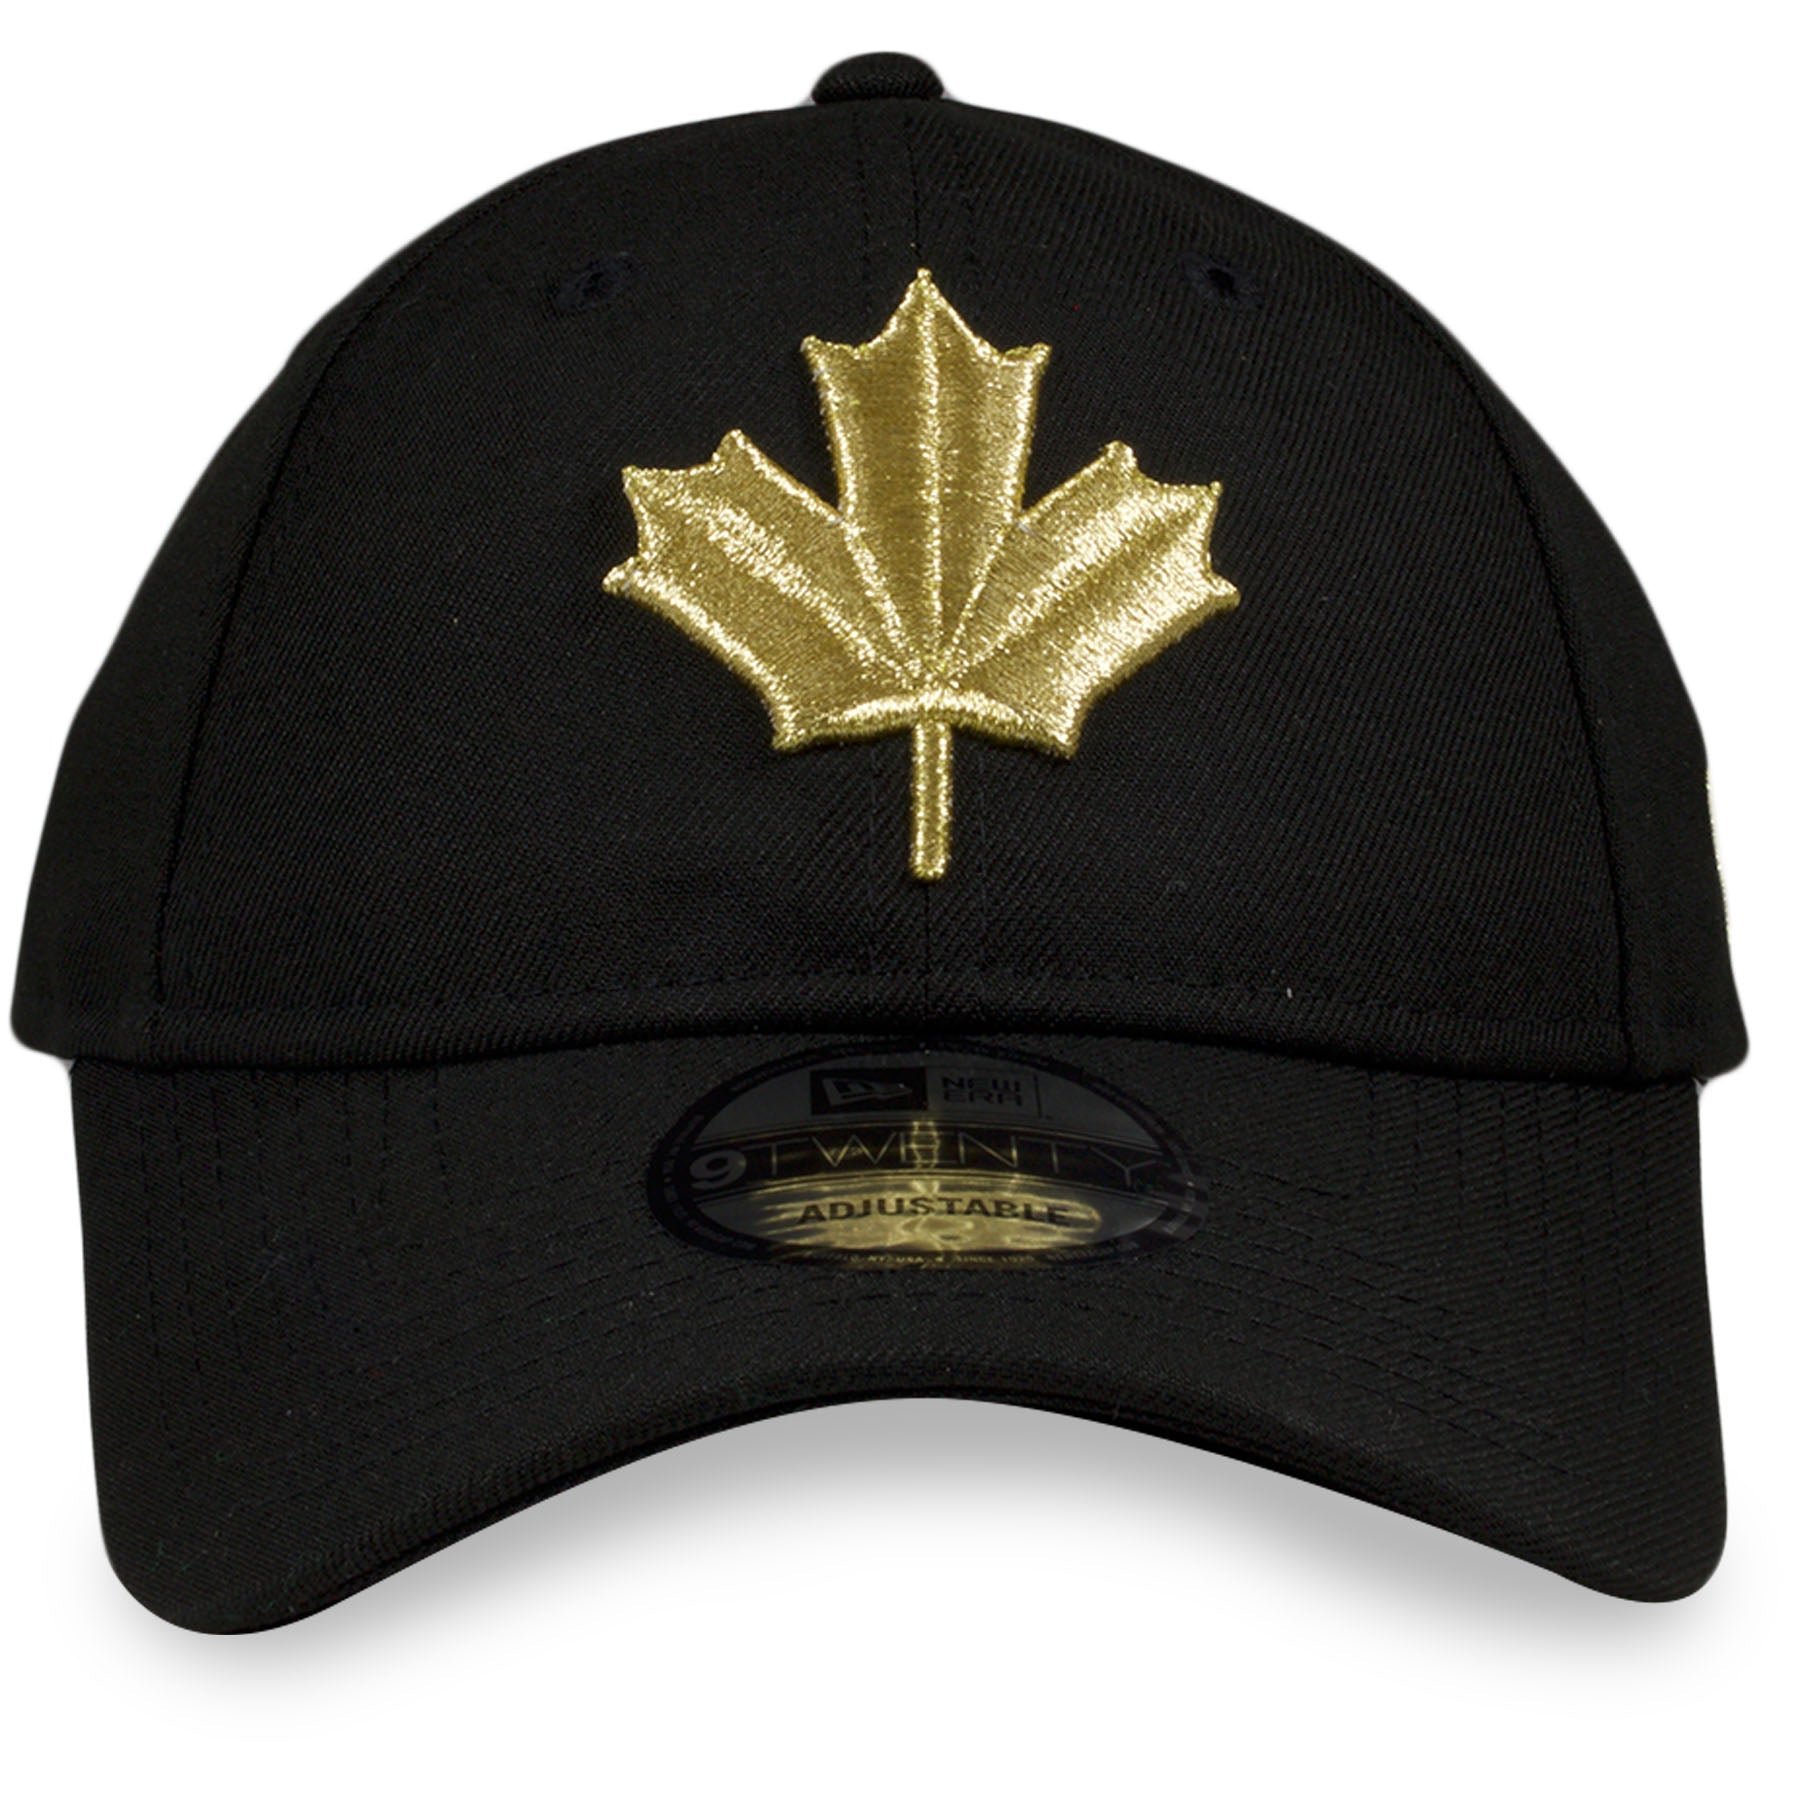 the Toronto Raptors 2019 NBA City Series Black Dad Hat | Metallic Gold Leaf Logo Raptors Baseball Cap has a shiny gold maple leaf on the front